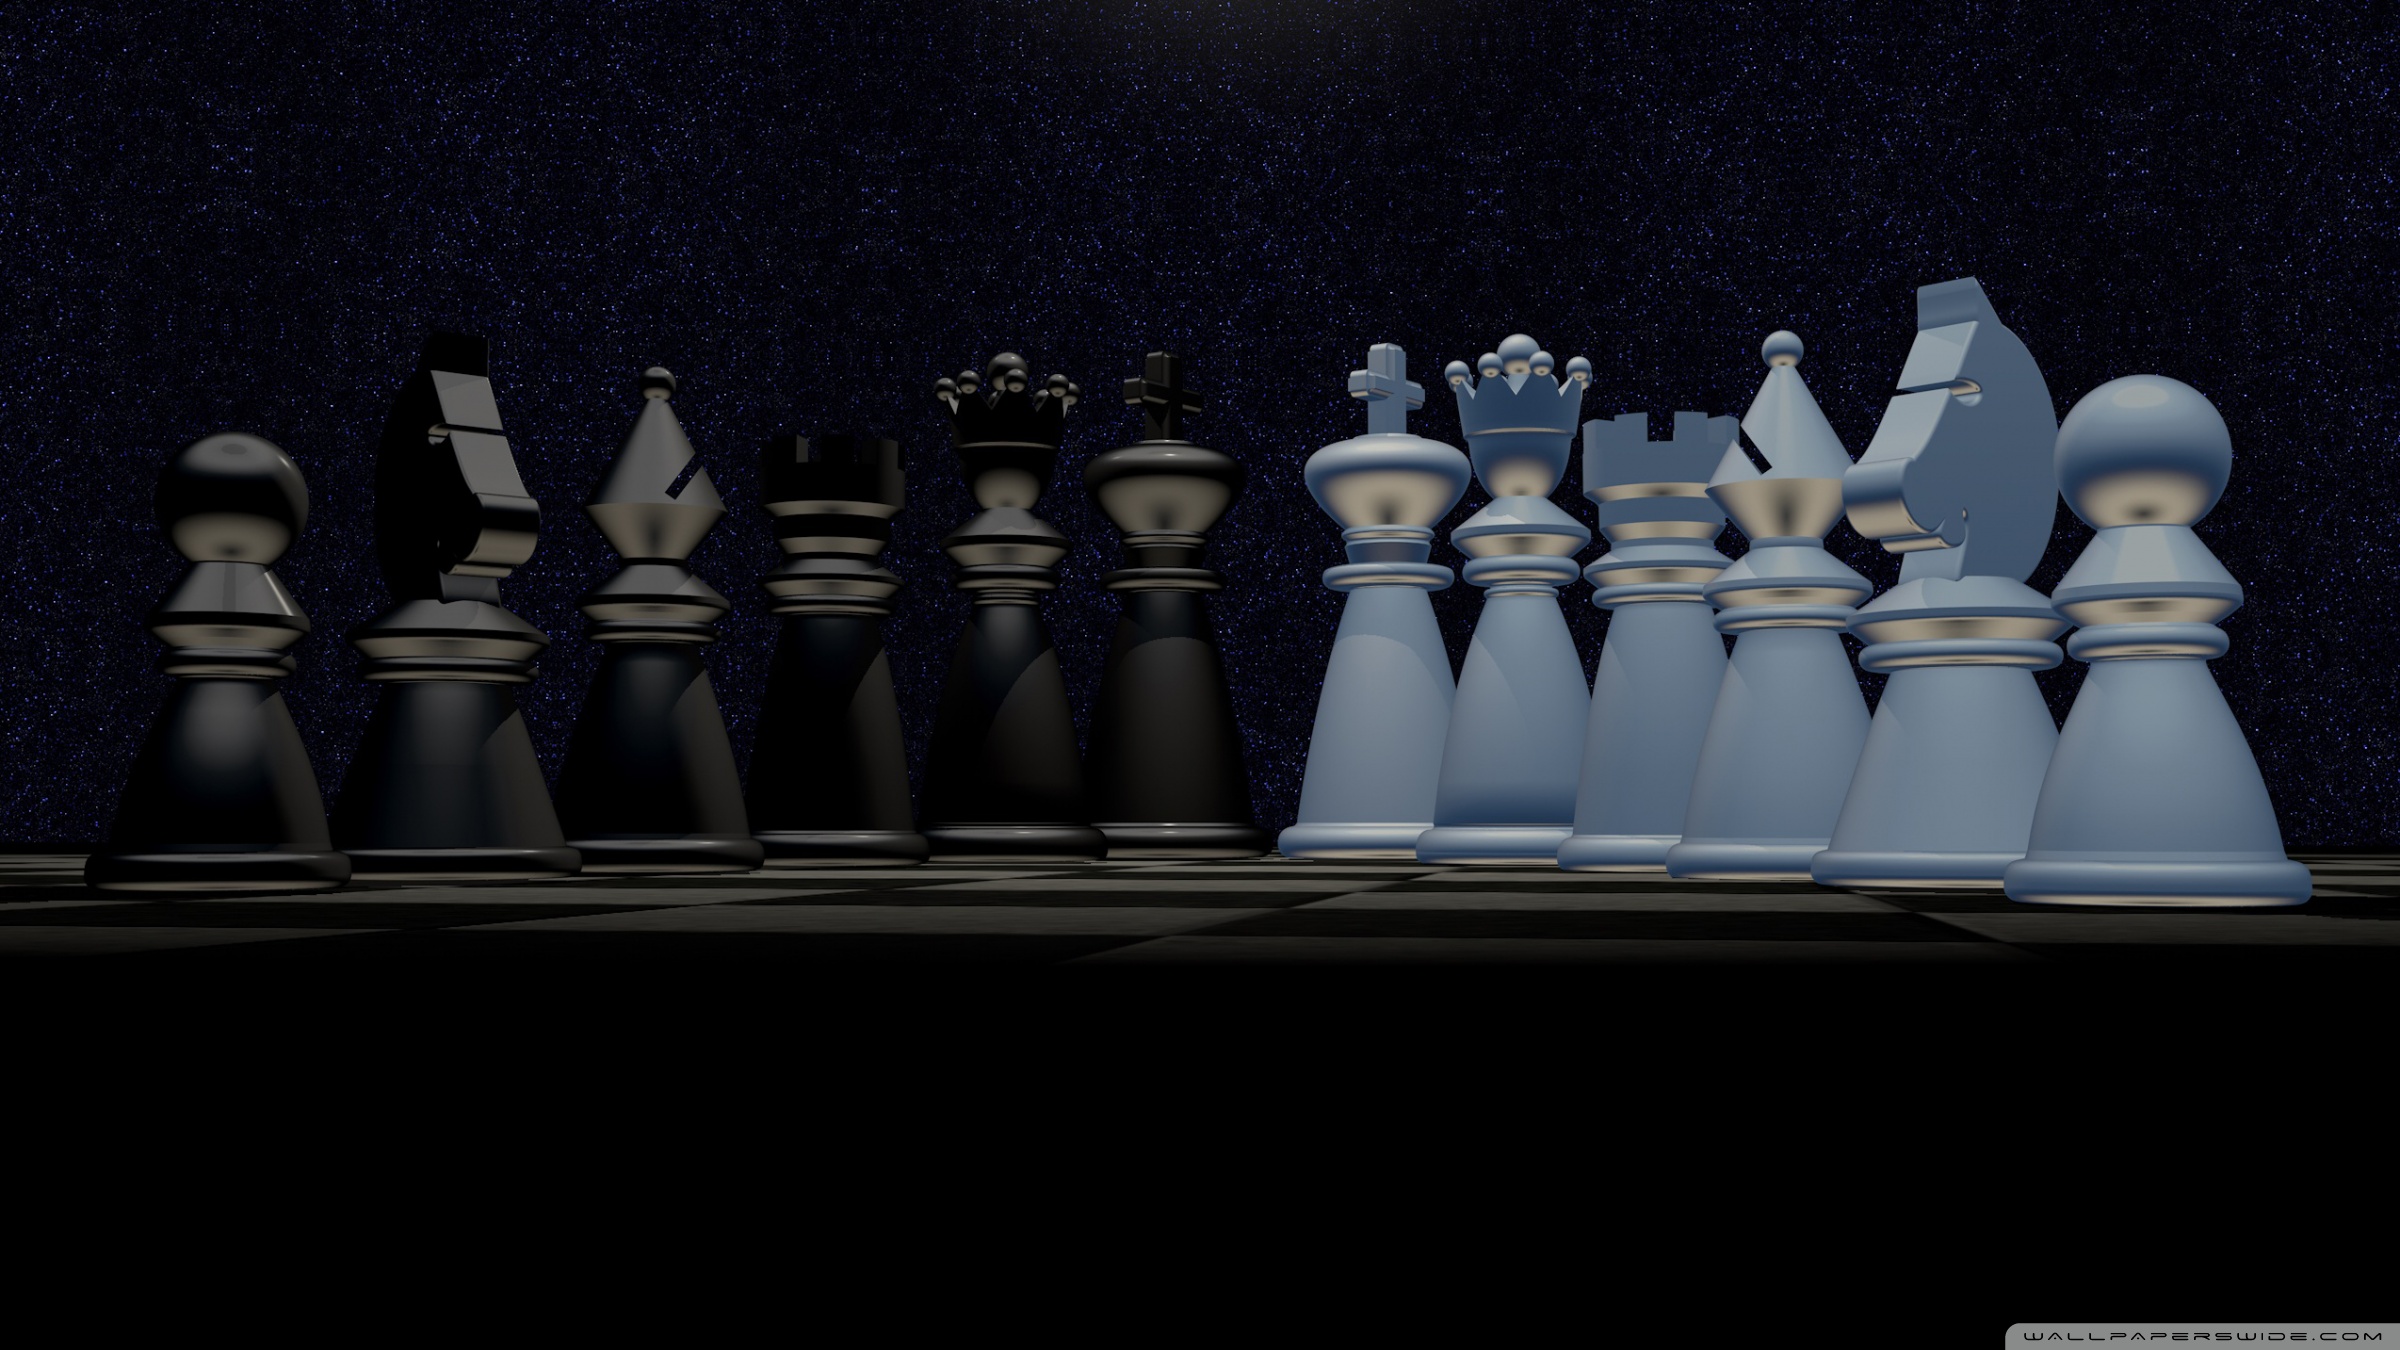 Chess full hd, hdtv, fhd, 1080p wallpapers hd, desktop backgrounds